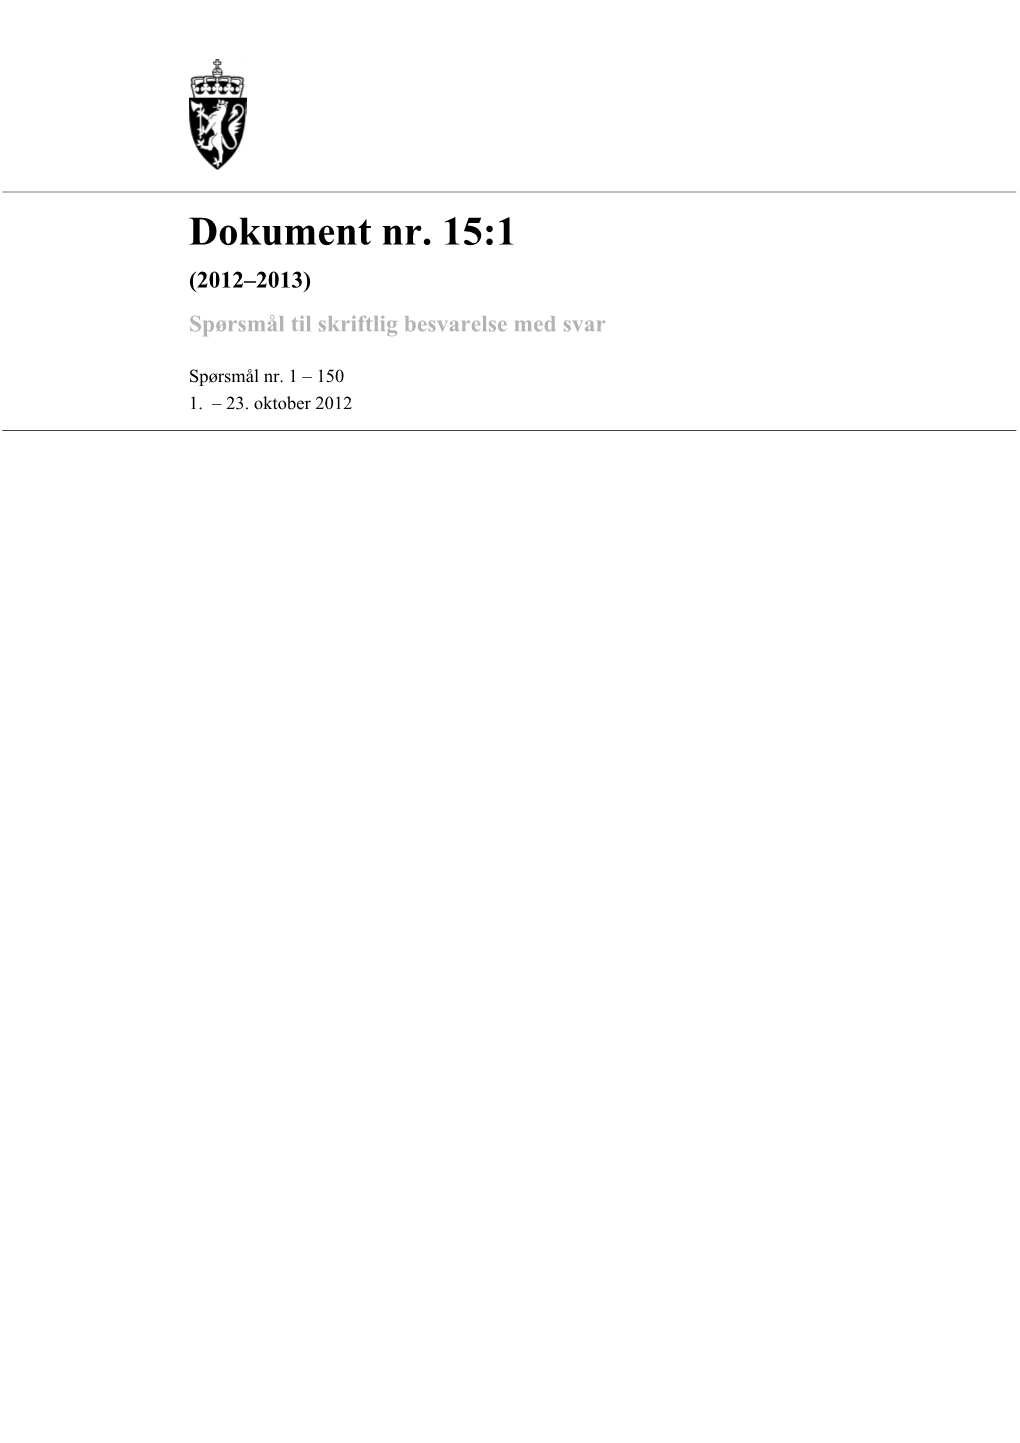 Dokument Nr. 15:1 (2012–2013). Spørsmål Nr. 1-150